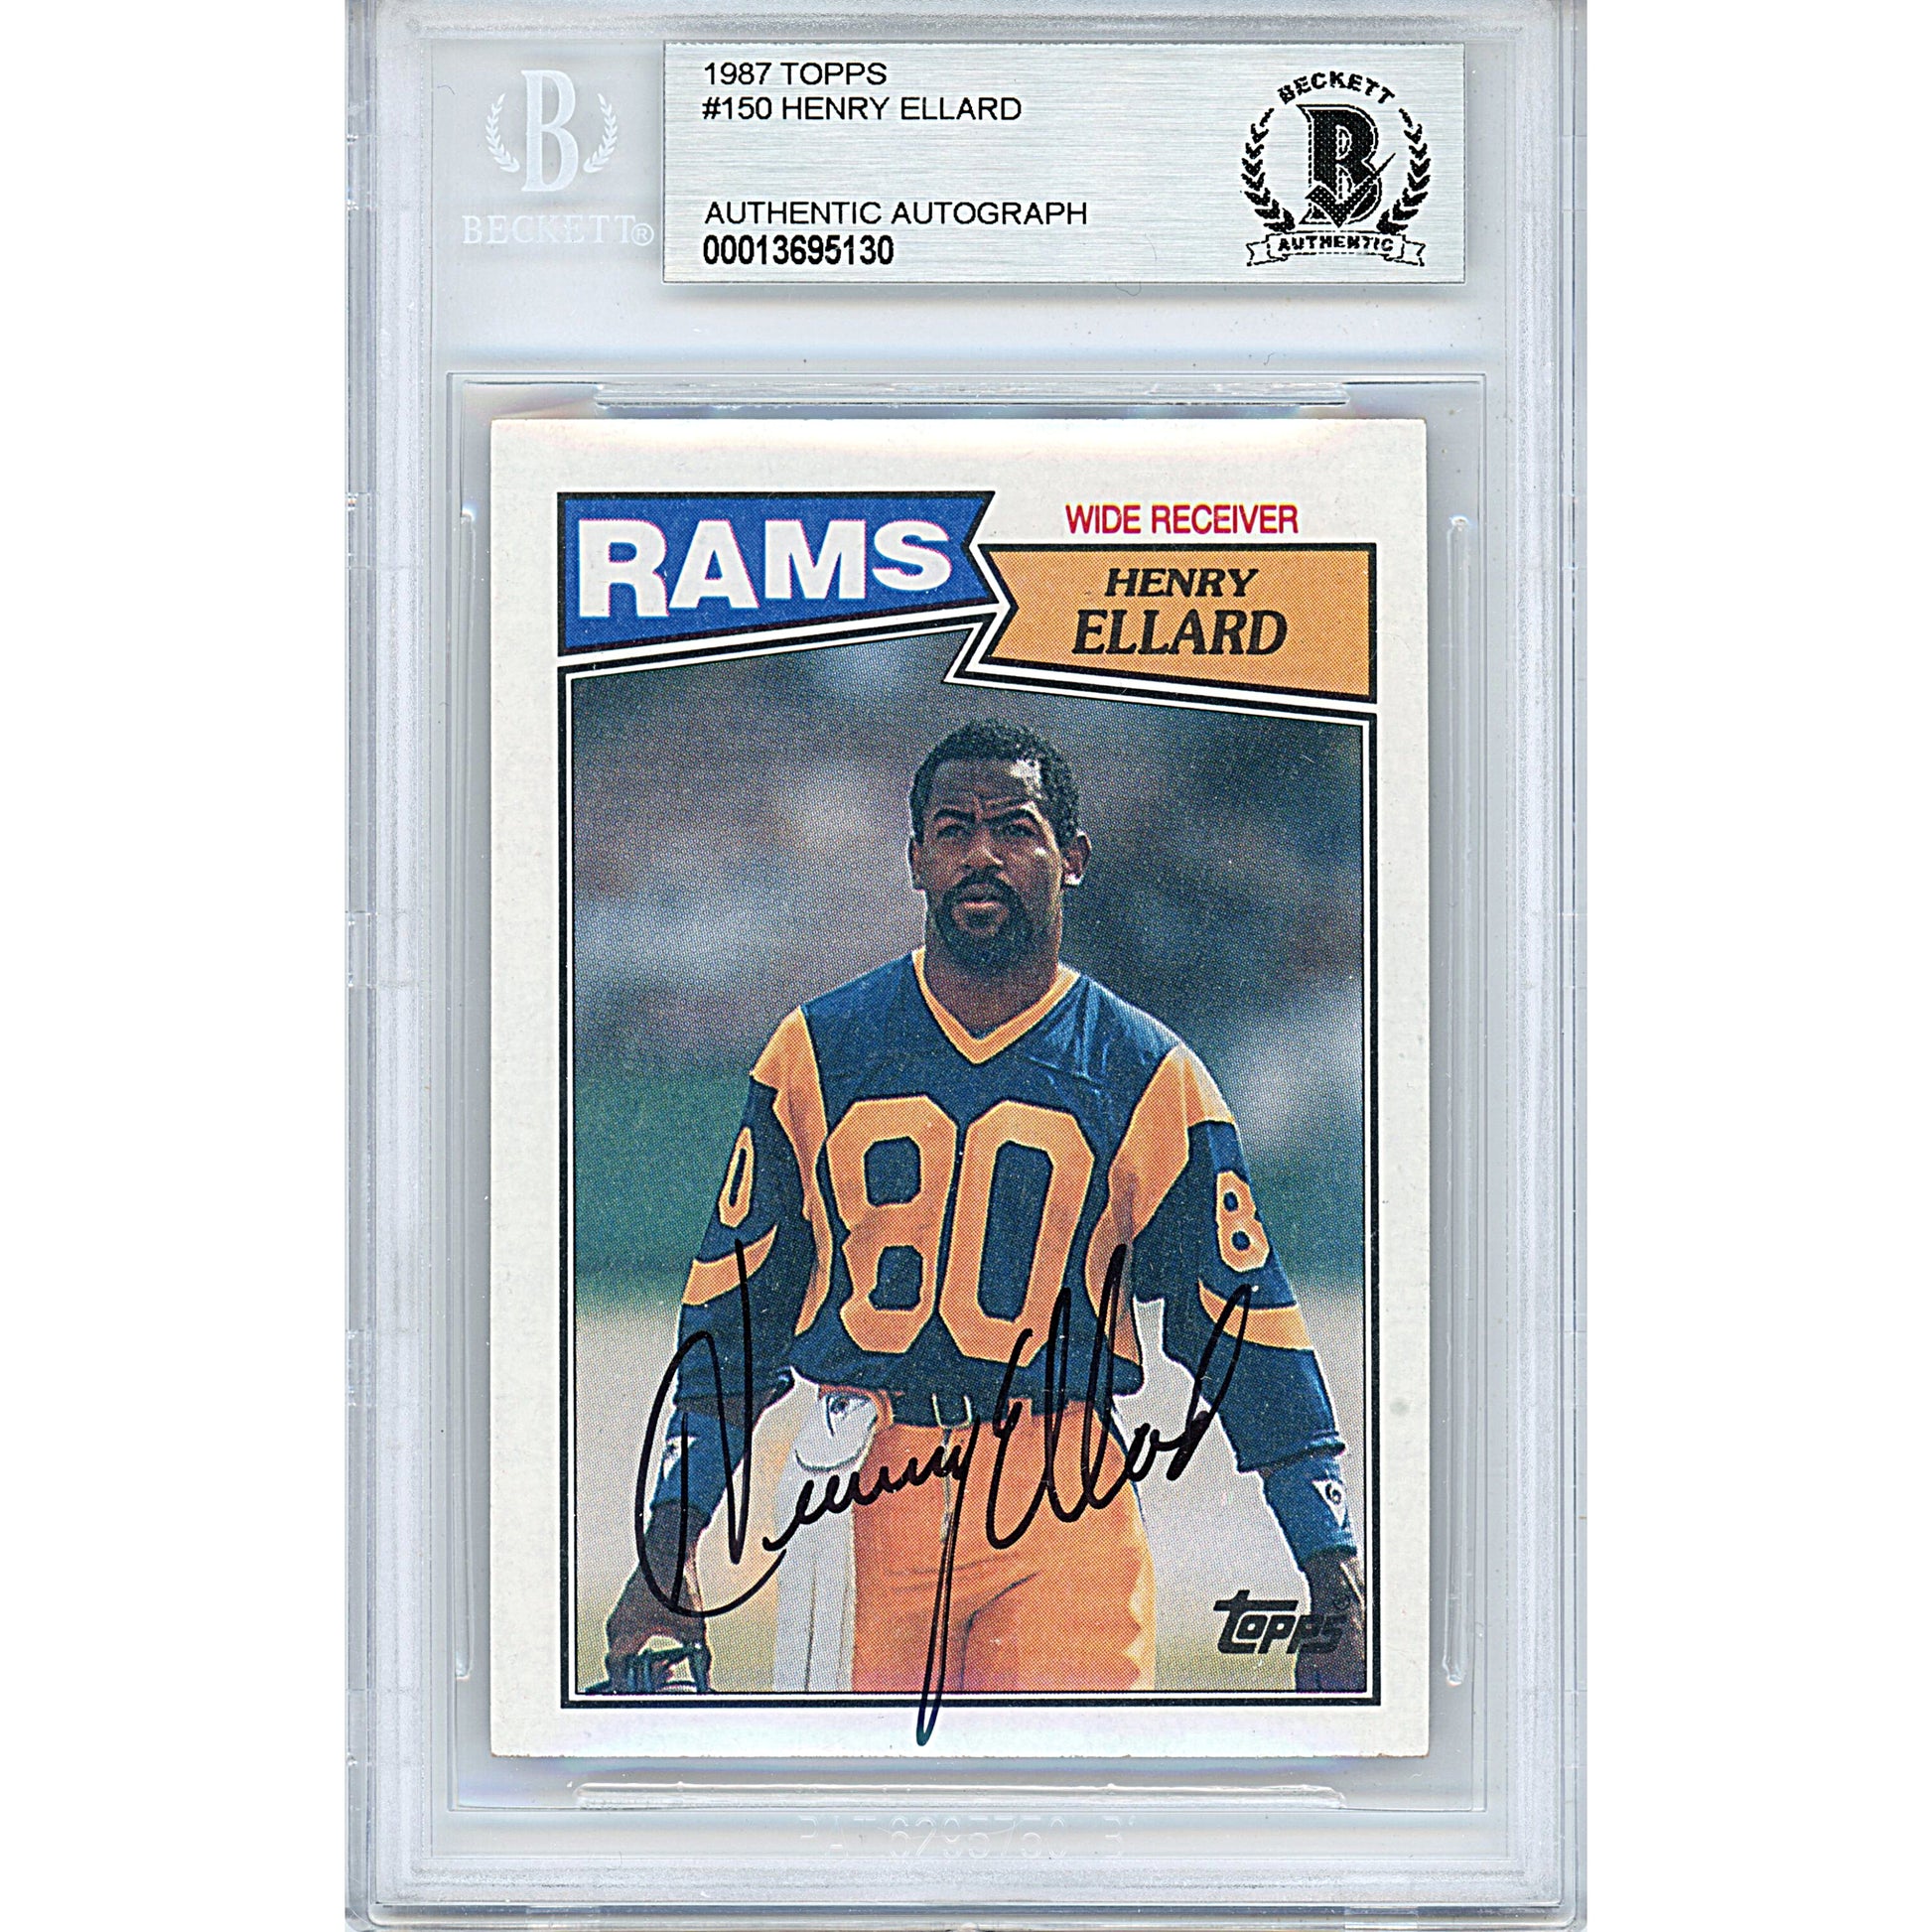 Footballs- Autographed- Henry Ellard Signed Los Angeles Rams 1987 Topps Football Card Beckett BAS Slabbed 00013695130 - 101